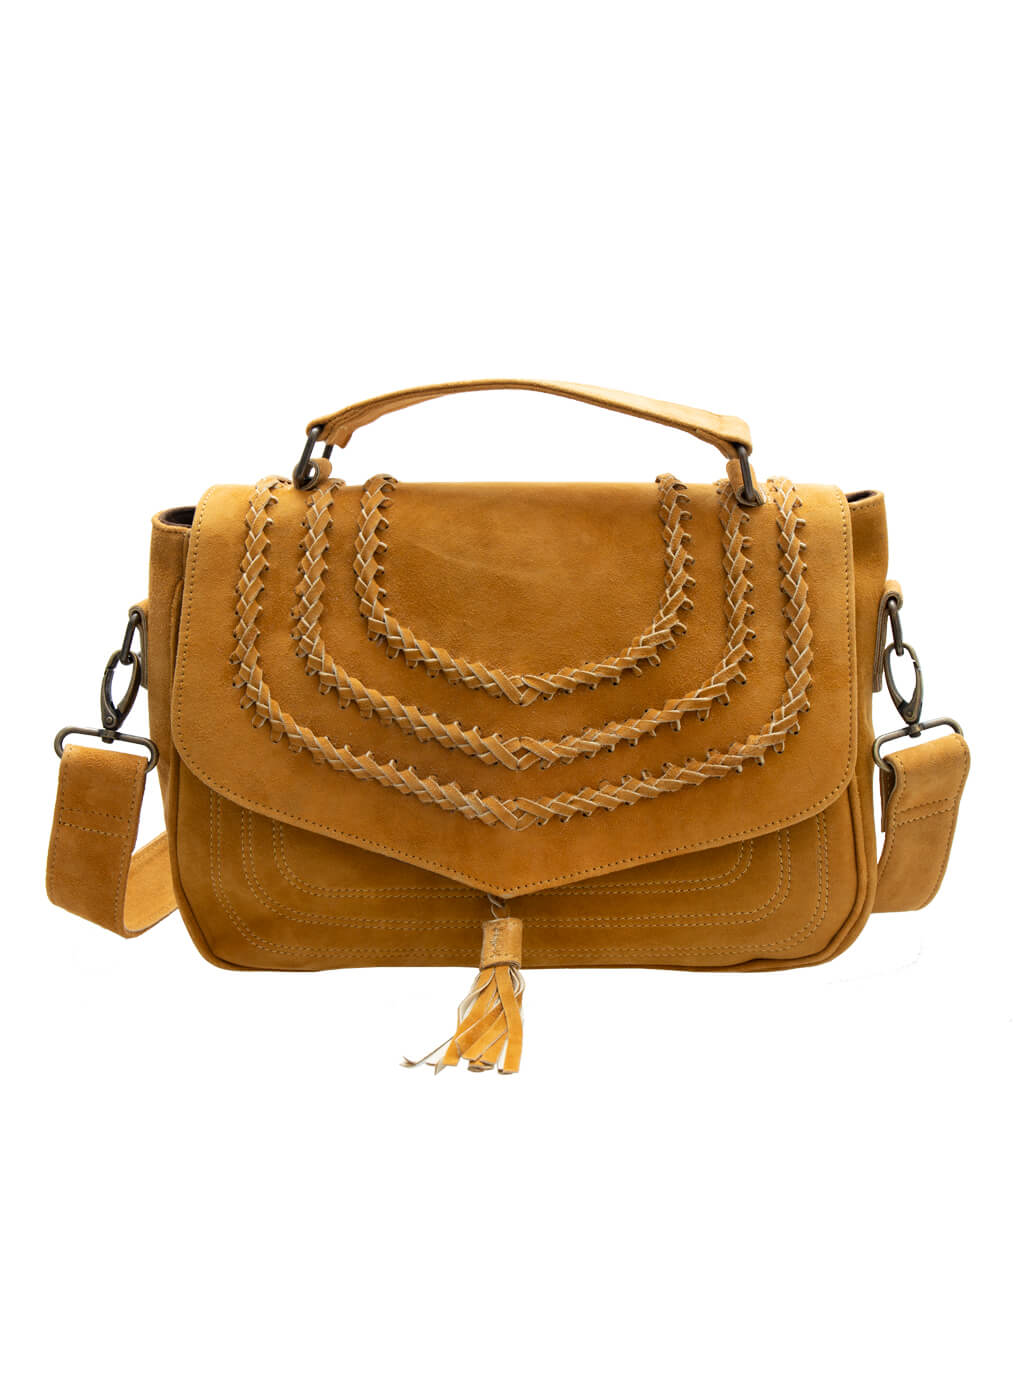 Goat Leather Bag “Just About you”, saffron